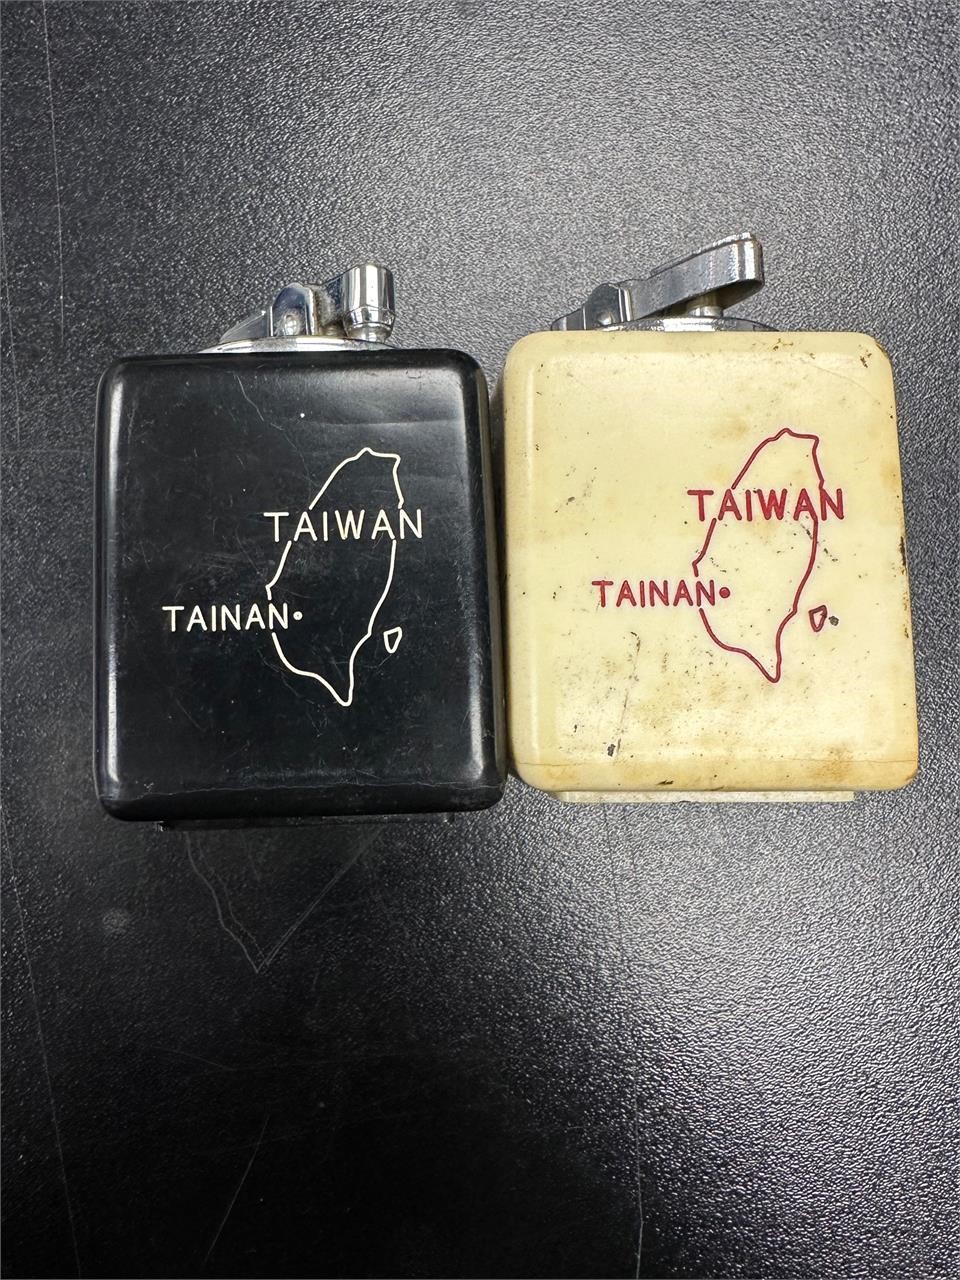 Prince Taiwan Cigarette lighters 1959 1961